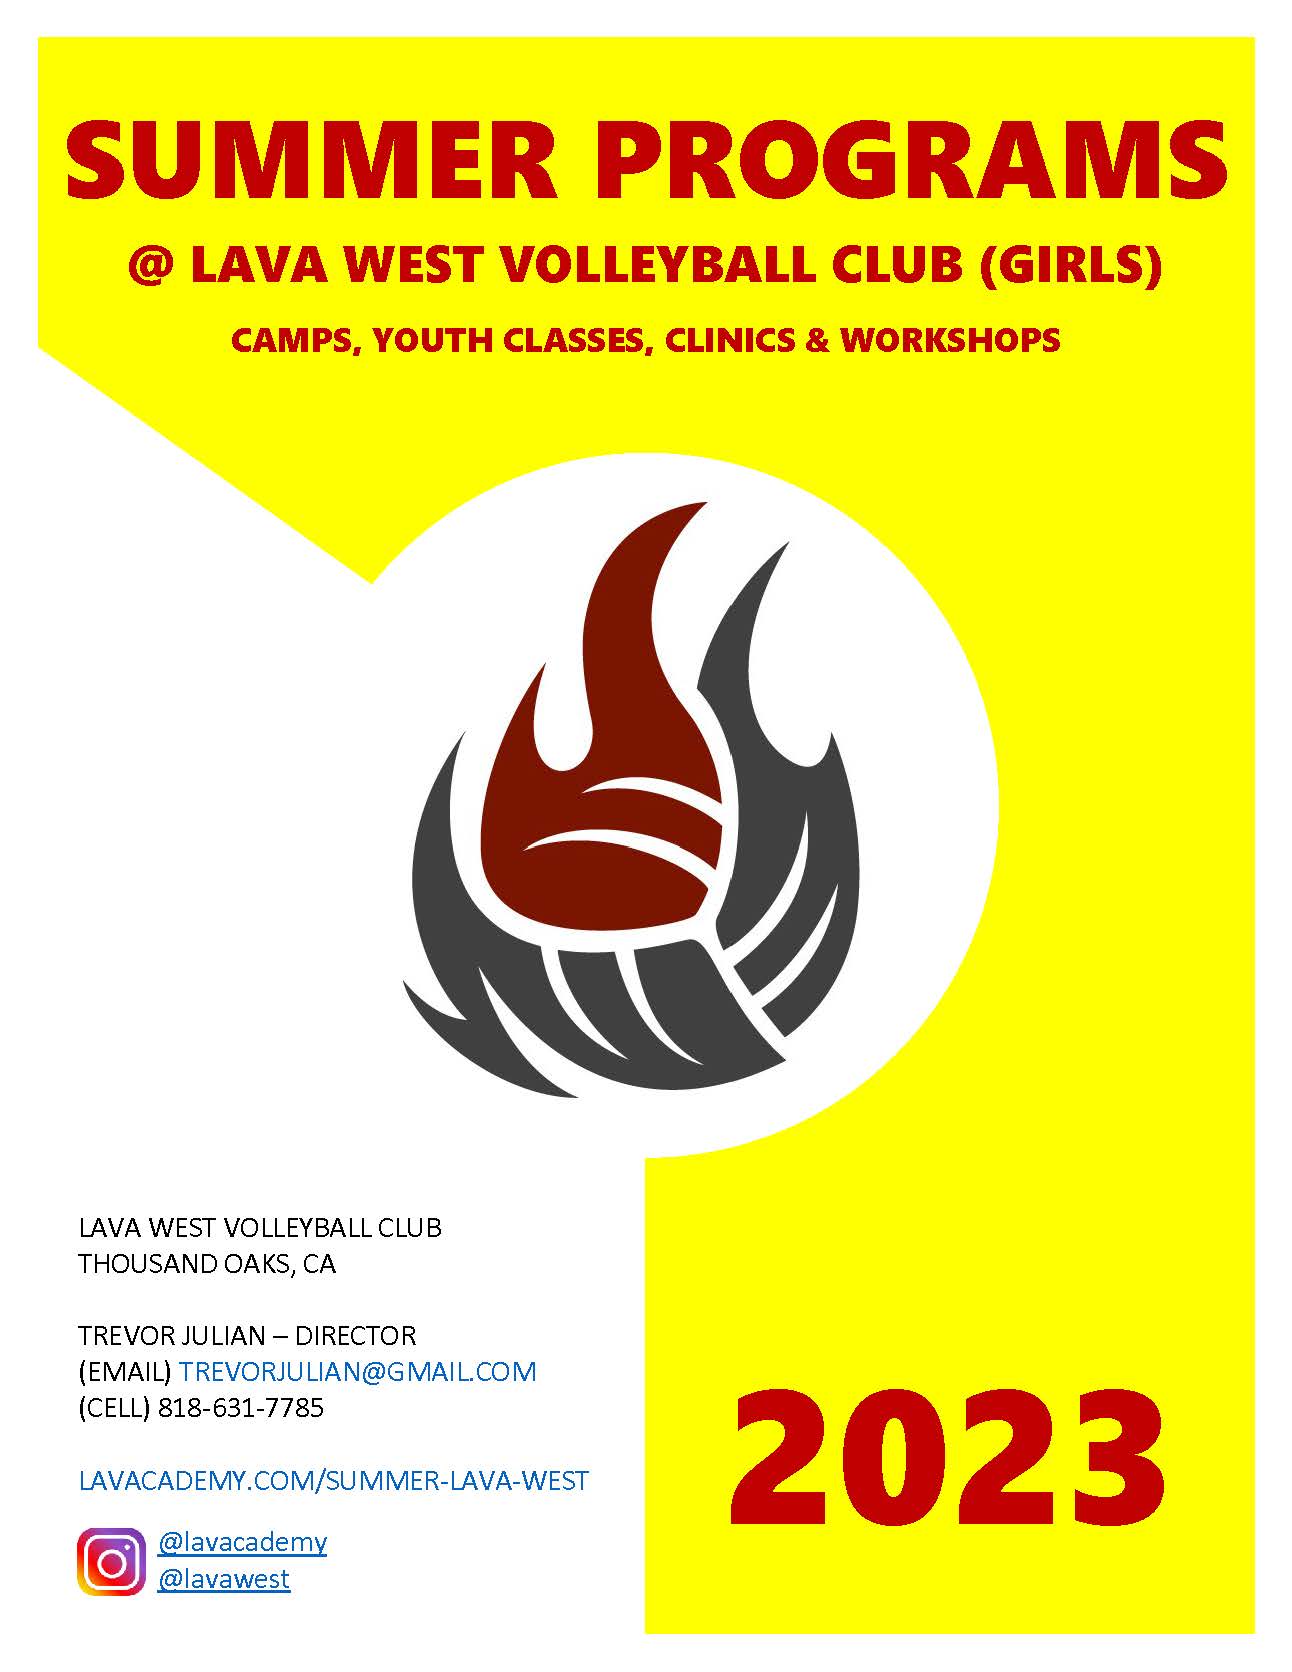 Program Guide - Summer 2023 - Lava West - 01 cover